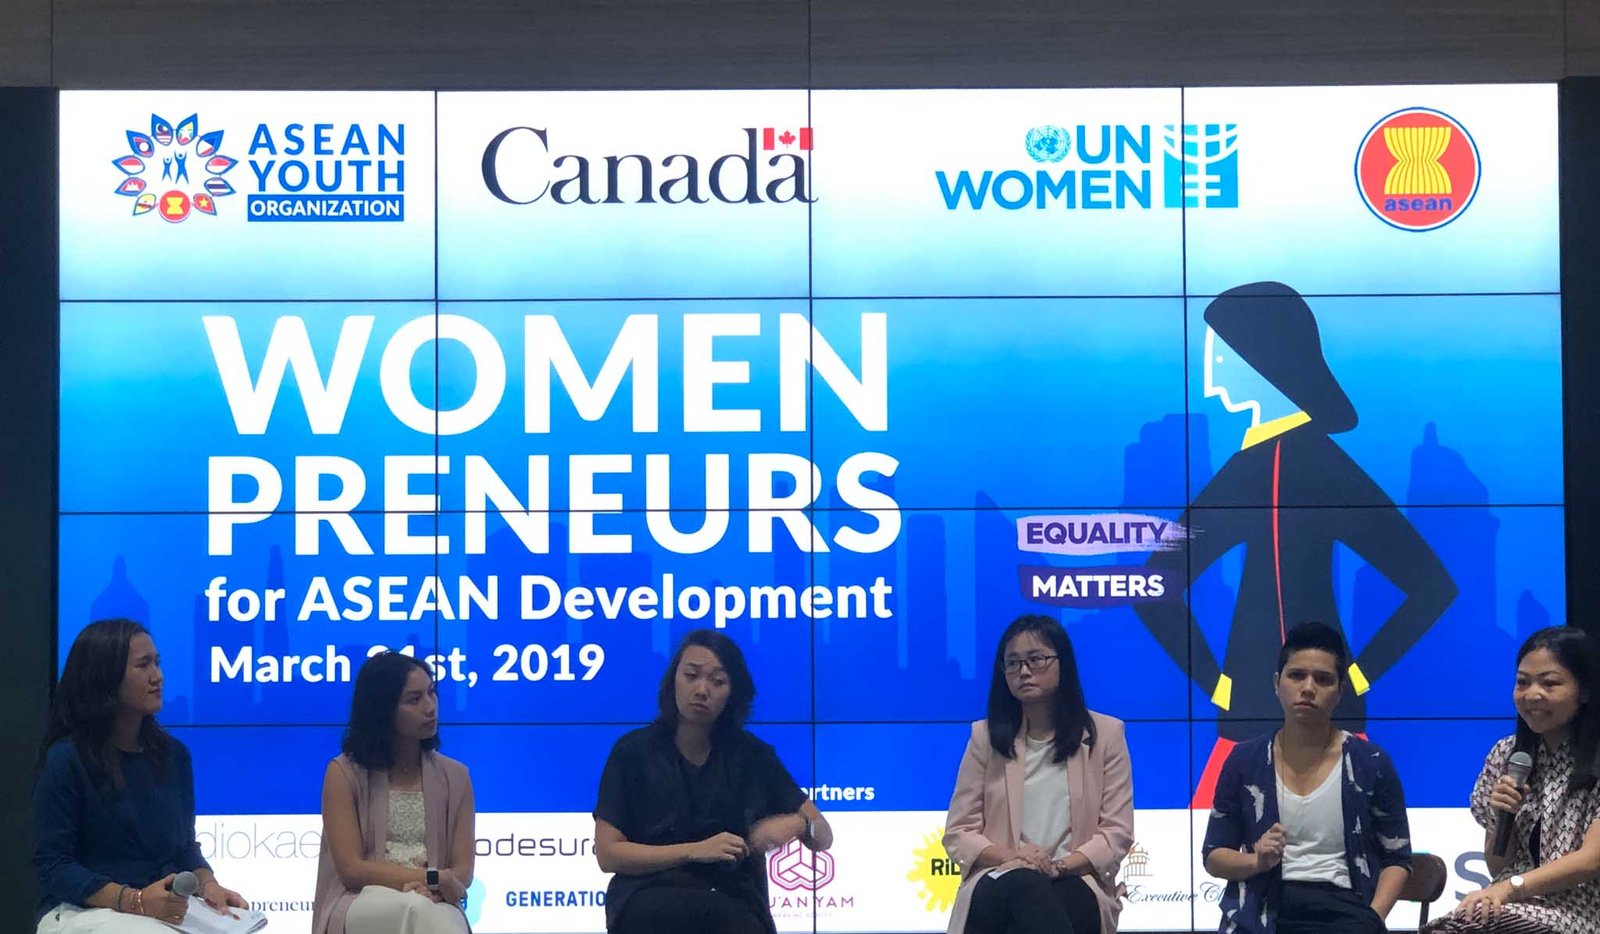 Womenpreneur in ASEAN